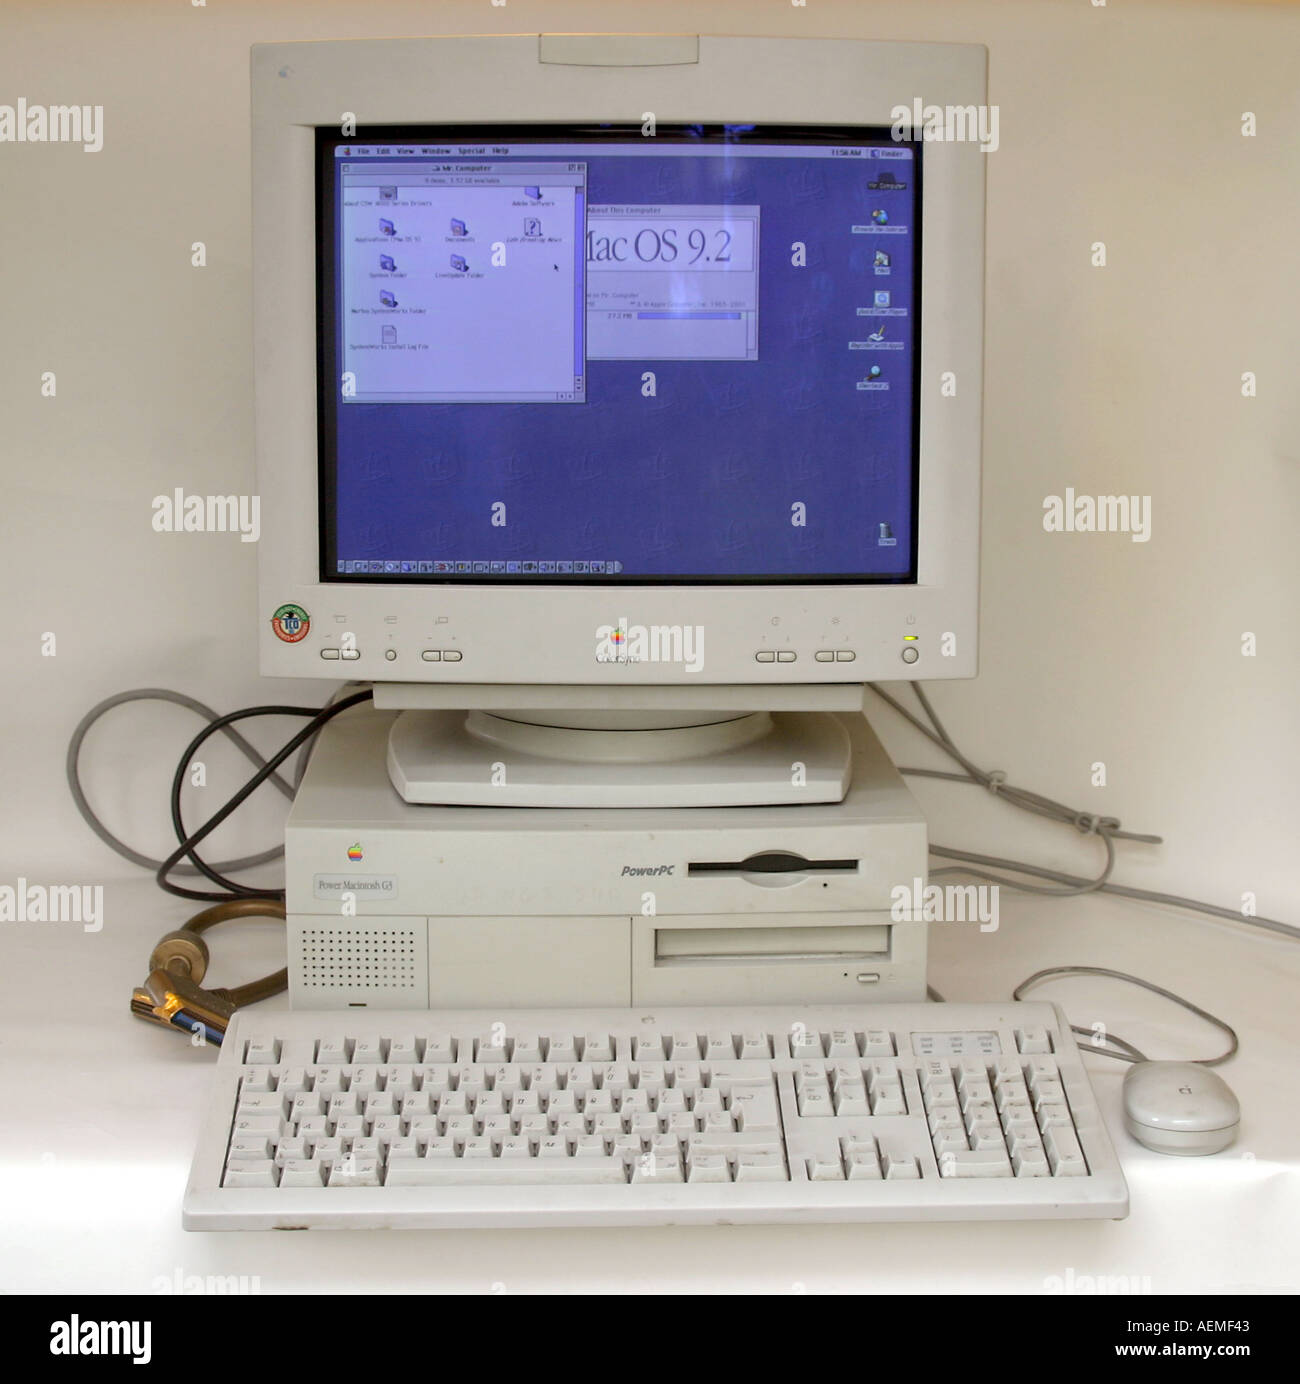 Apple Macintosh Desktop G3 Computer 233 Mhz Power Pc 4 Gigabyte